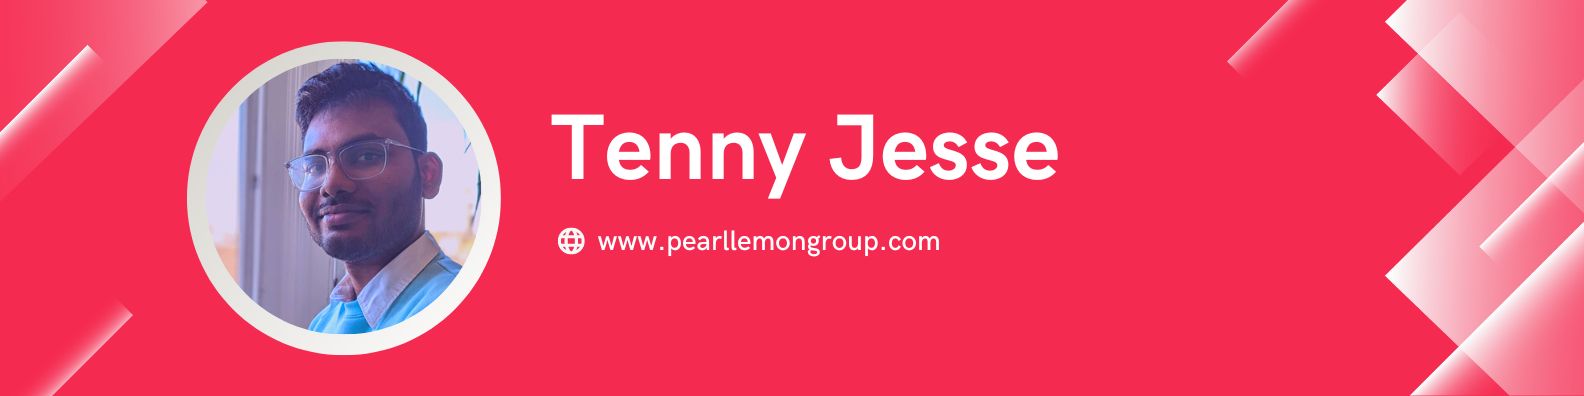 Tenny Jesse